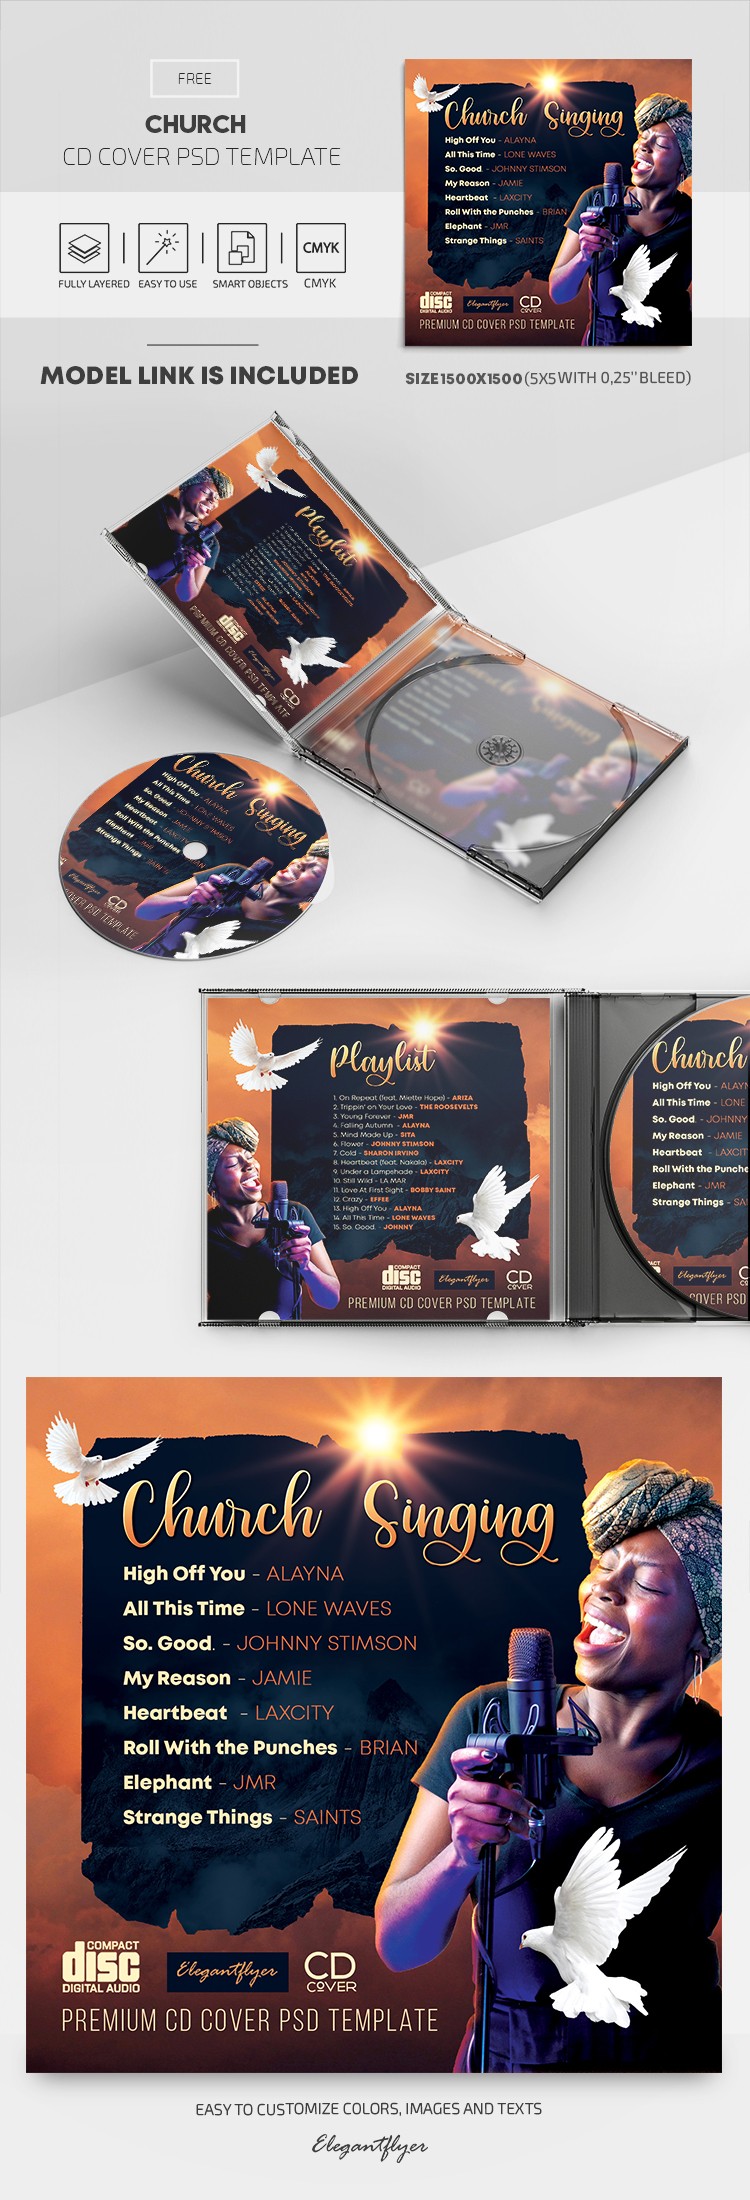 Portada del CD de la Iglesia by ElegantFlyer